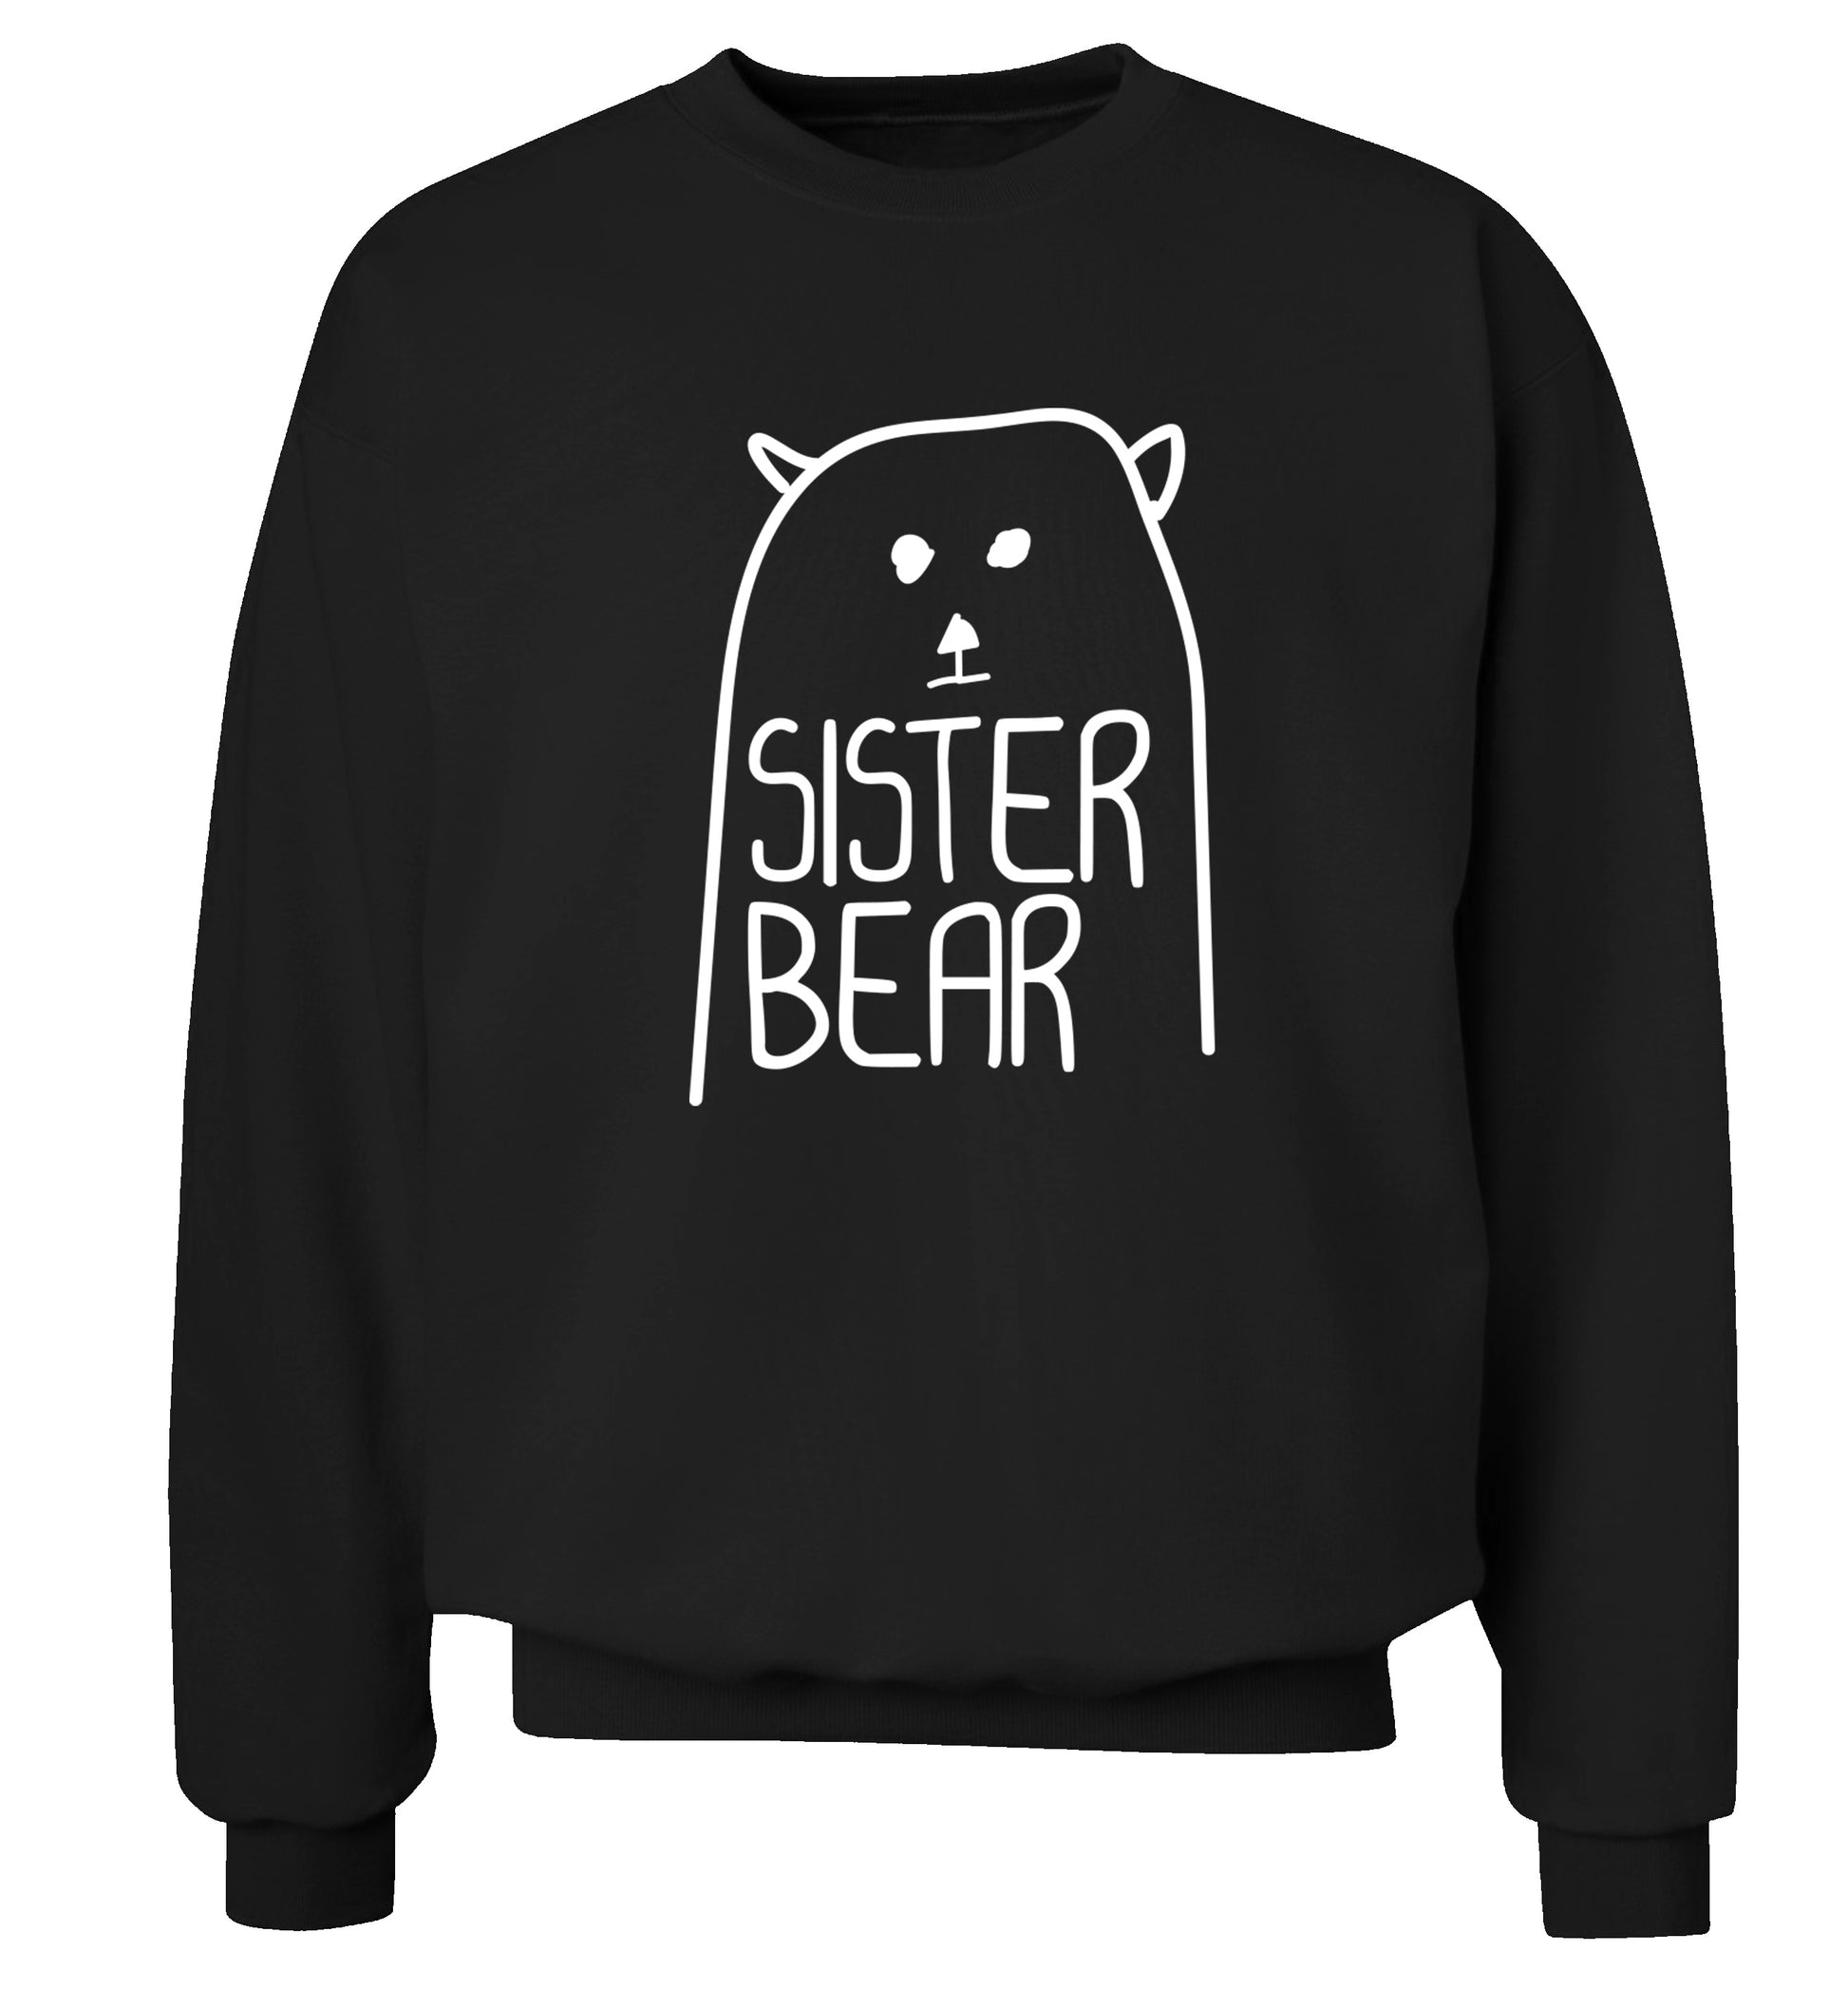 Sister bear Adult's unisex black Sweater 2XL